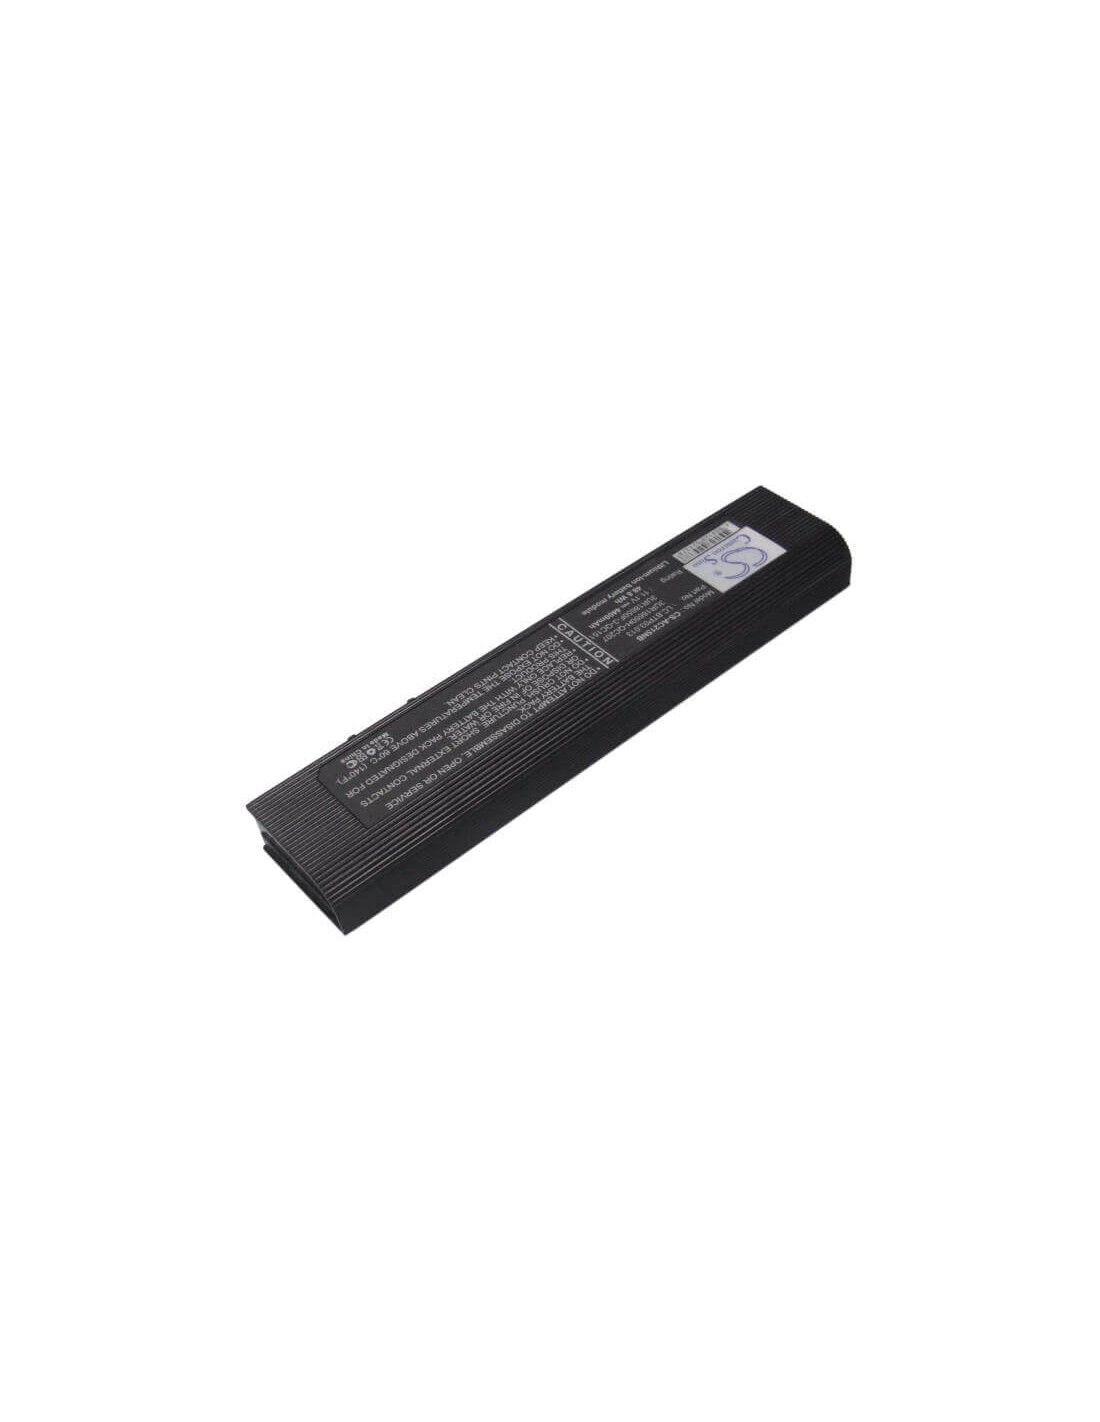 Black Battery for Acer Travelmate C213tmi, Travelmate C203etci, Travelmate C210 11.1V, 4400mAh - 48.84Wh